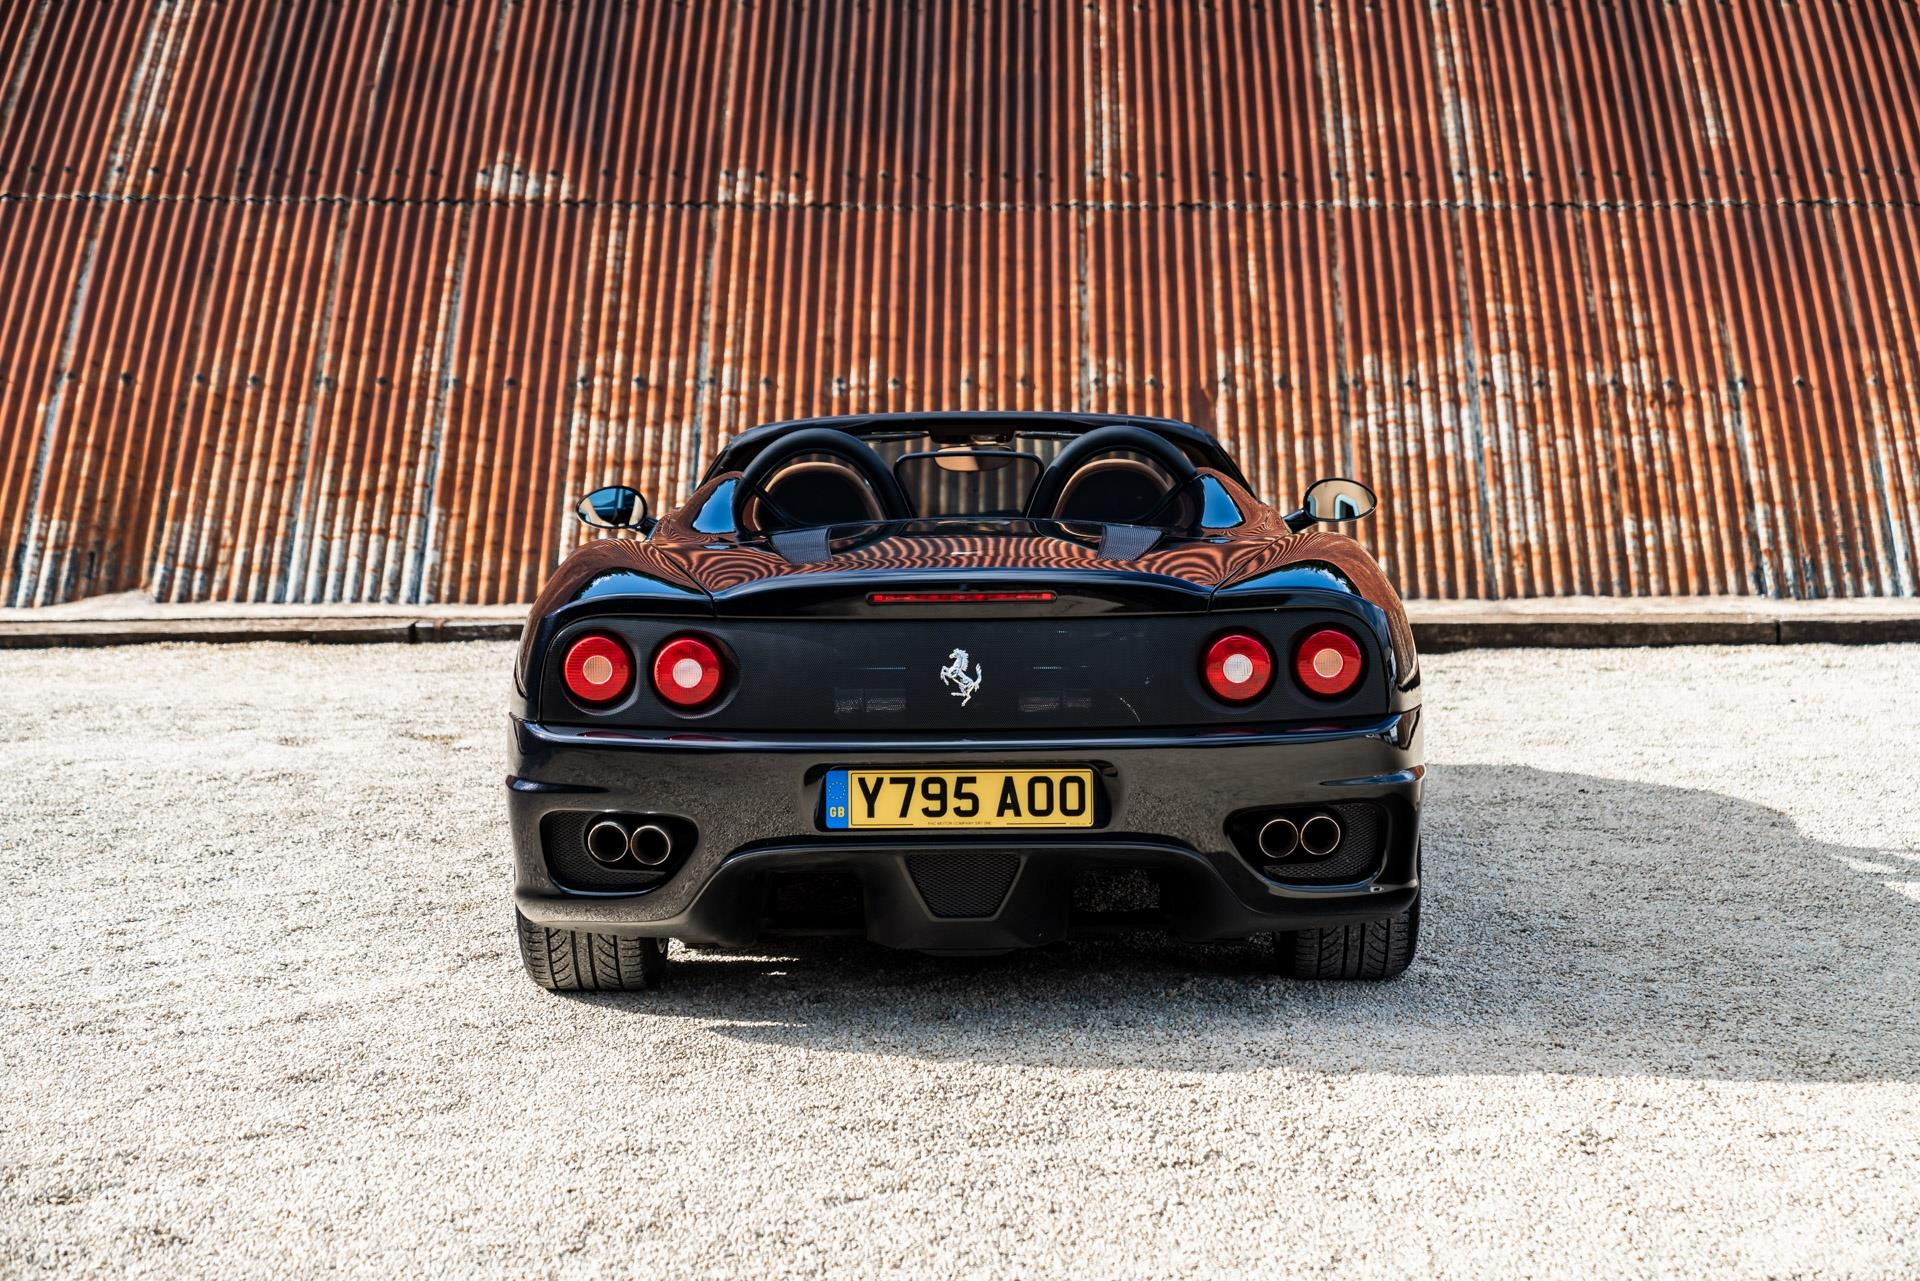 Chi tiết siêu xe Ferrari 360 Spider của David Beckham - 18